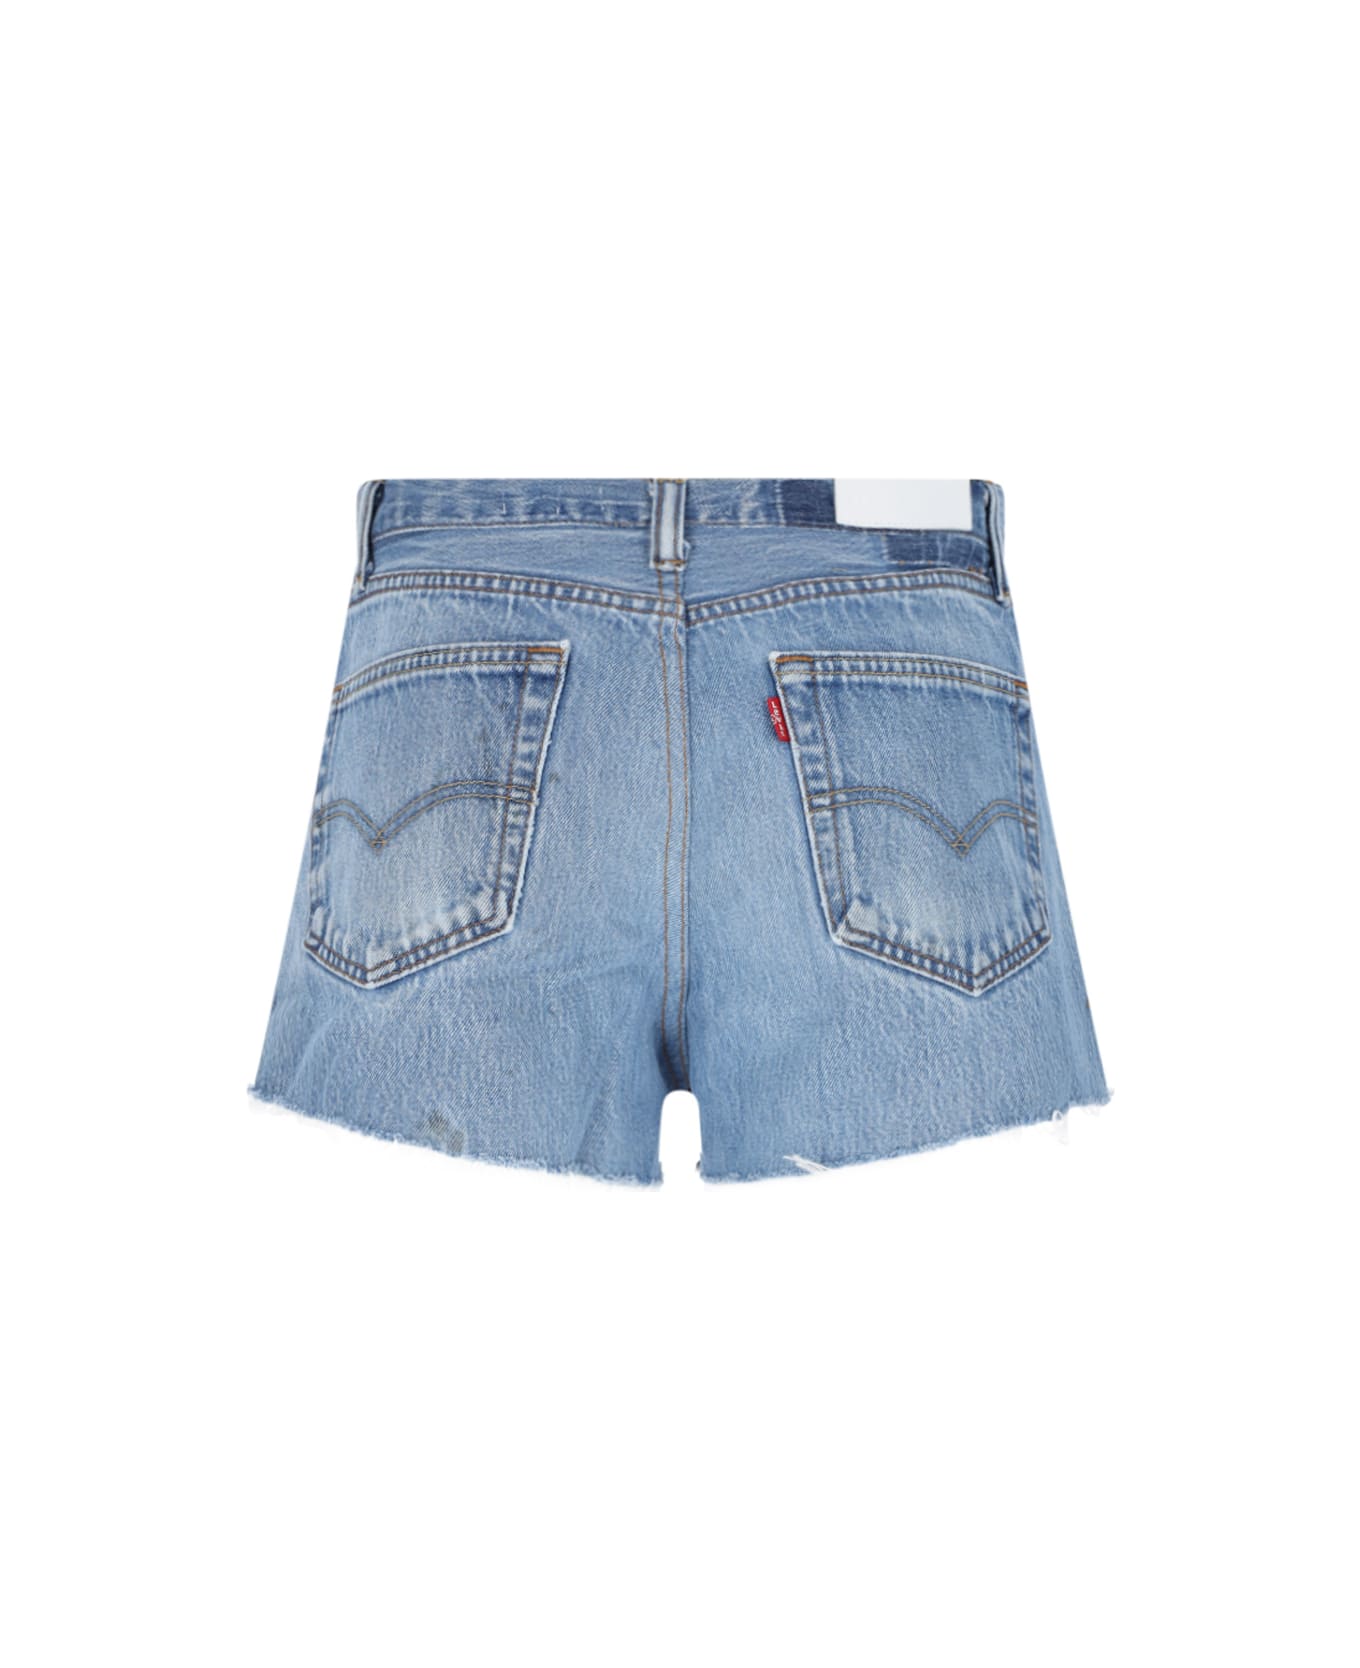 RE/DONE X Levi's Denim Shorts - Blue ショートパンツ